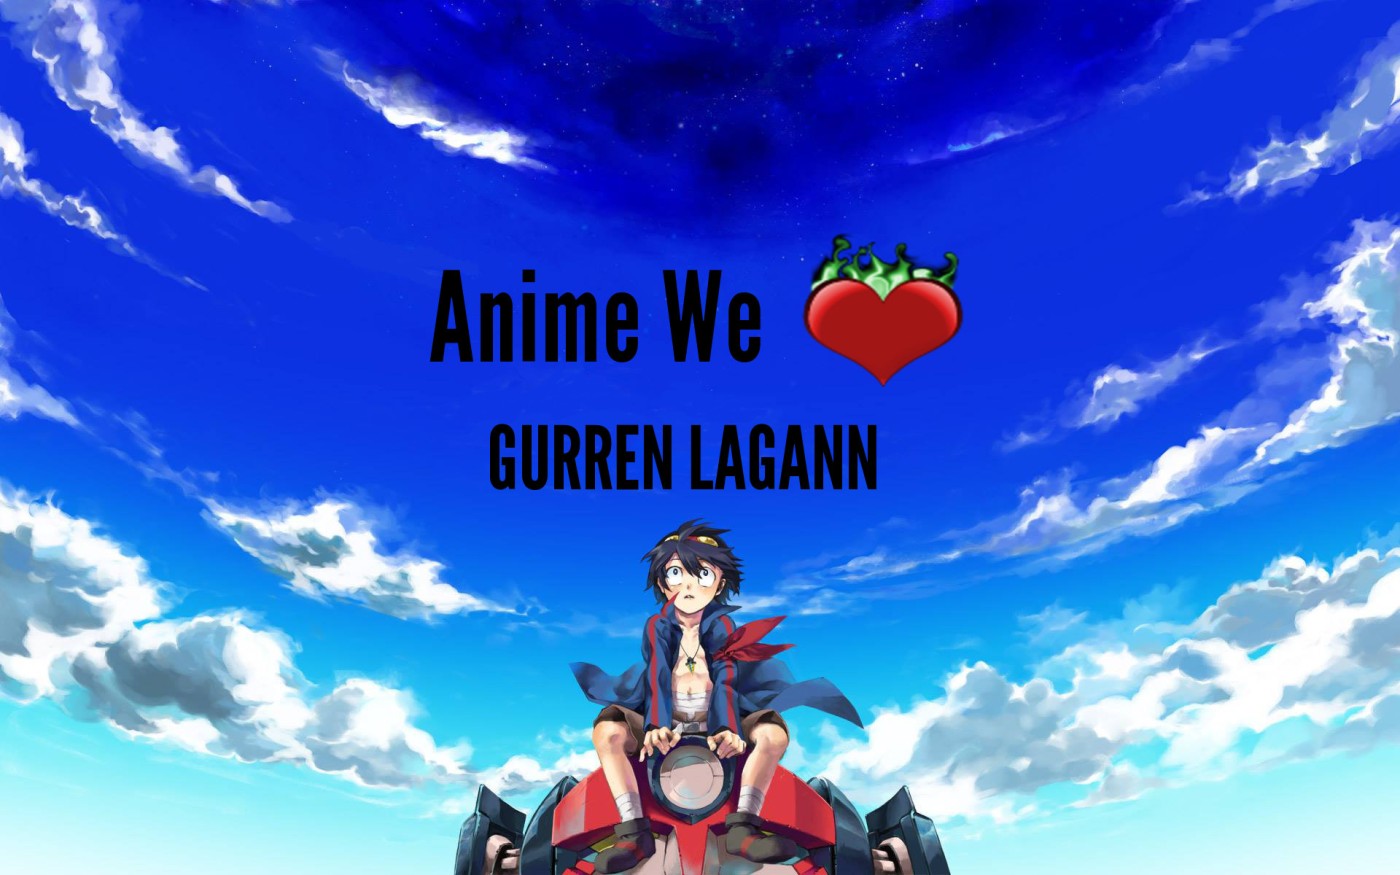 Don't you think Anti-Spiral from anime Tengen Toppa Guren Lagann